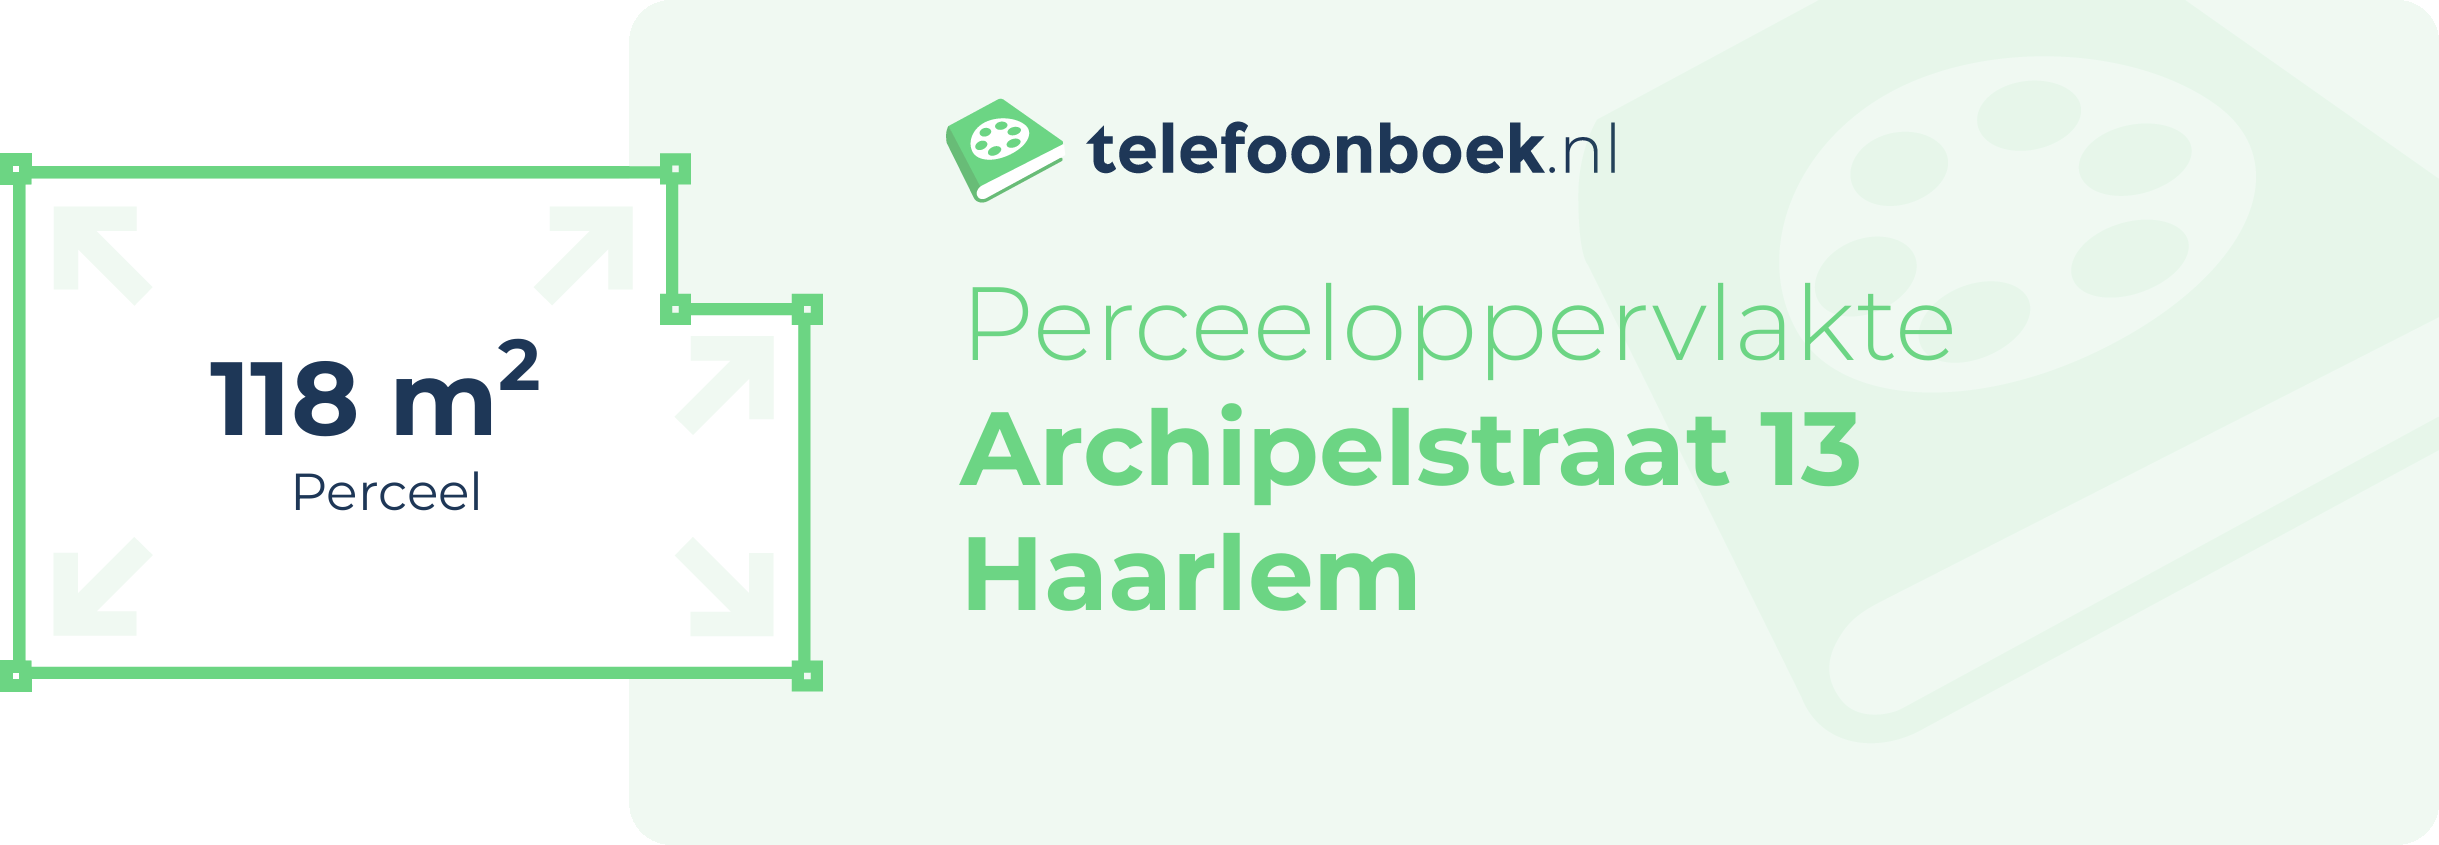 Perceeloppervlakte Archipelstraat 13 Haarlem